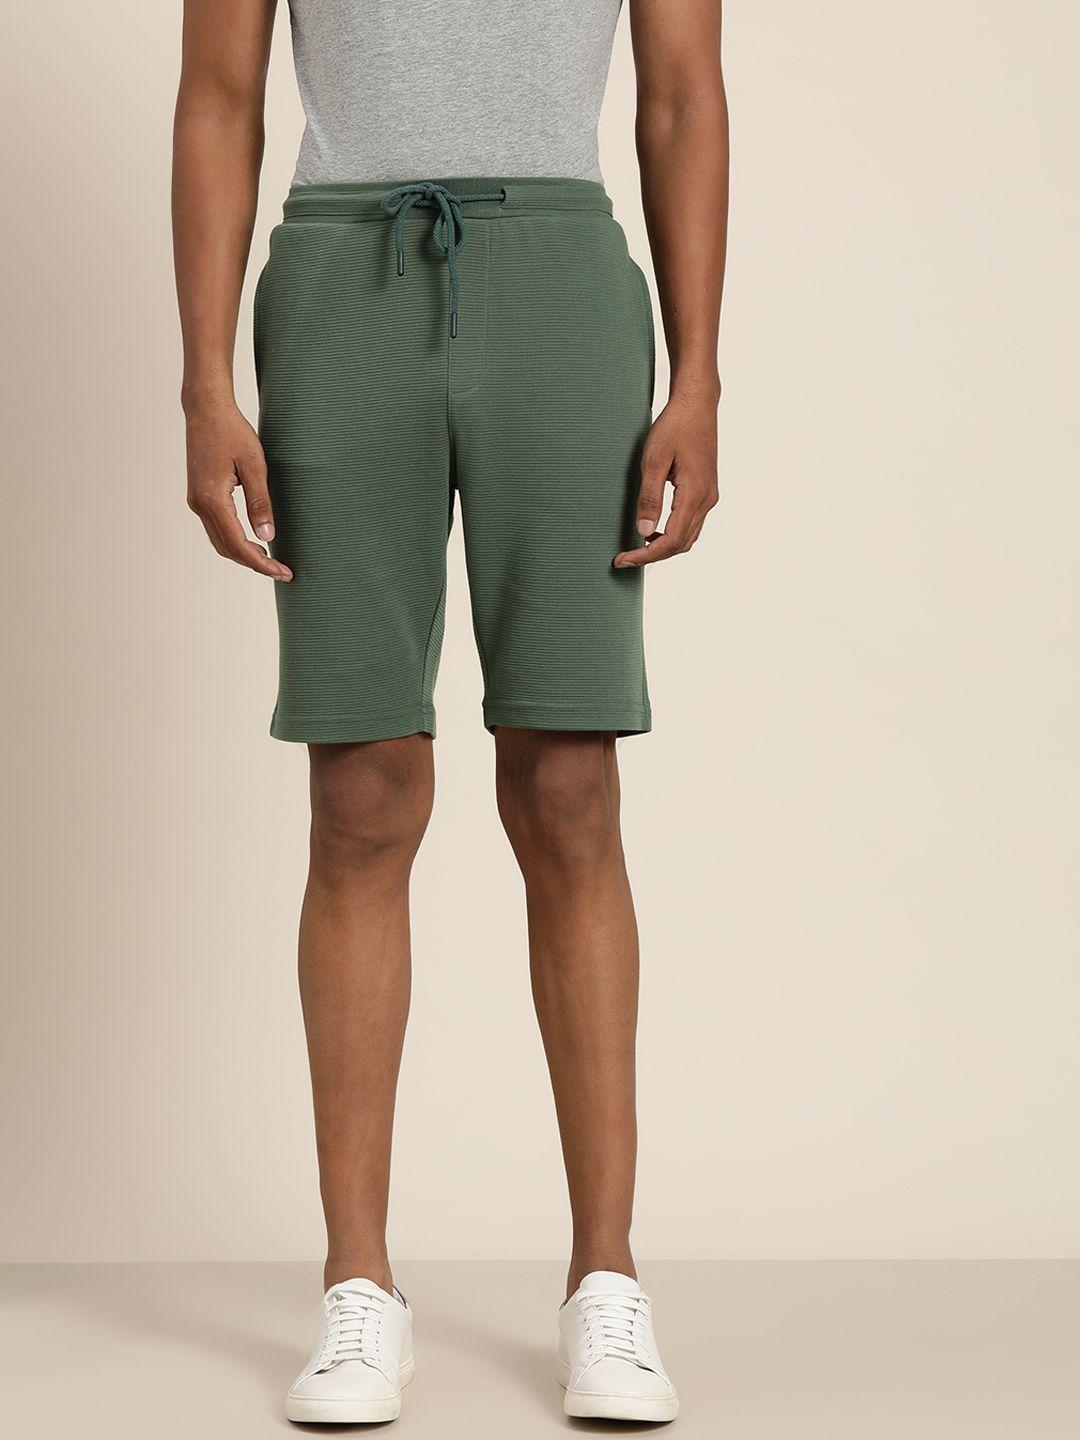 ether-men-olive-green-self-striped-shorts